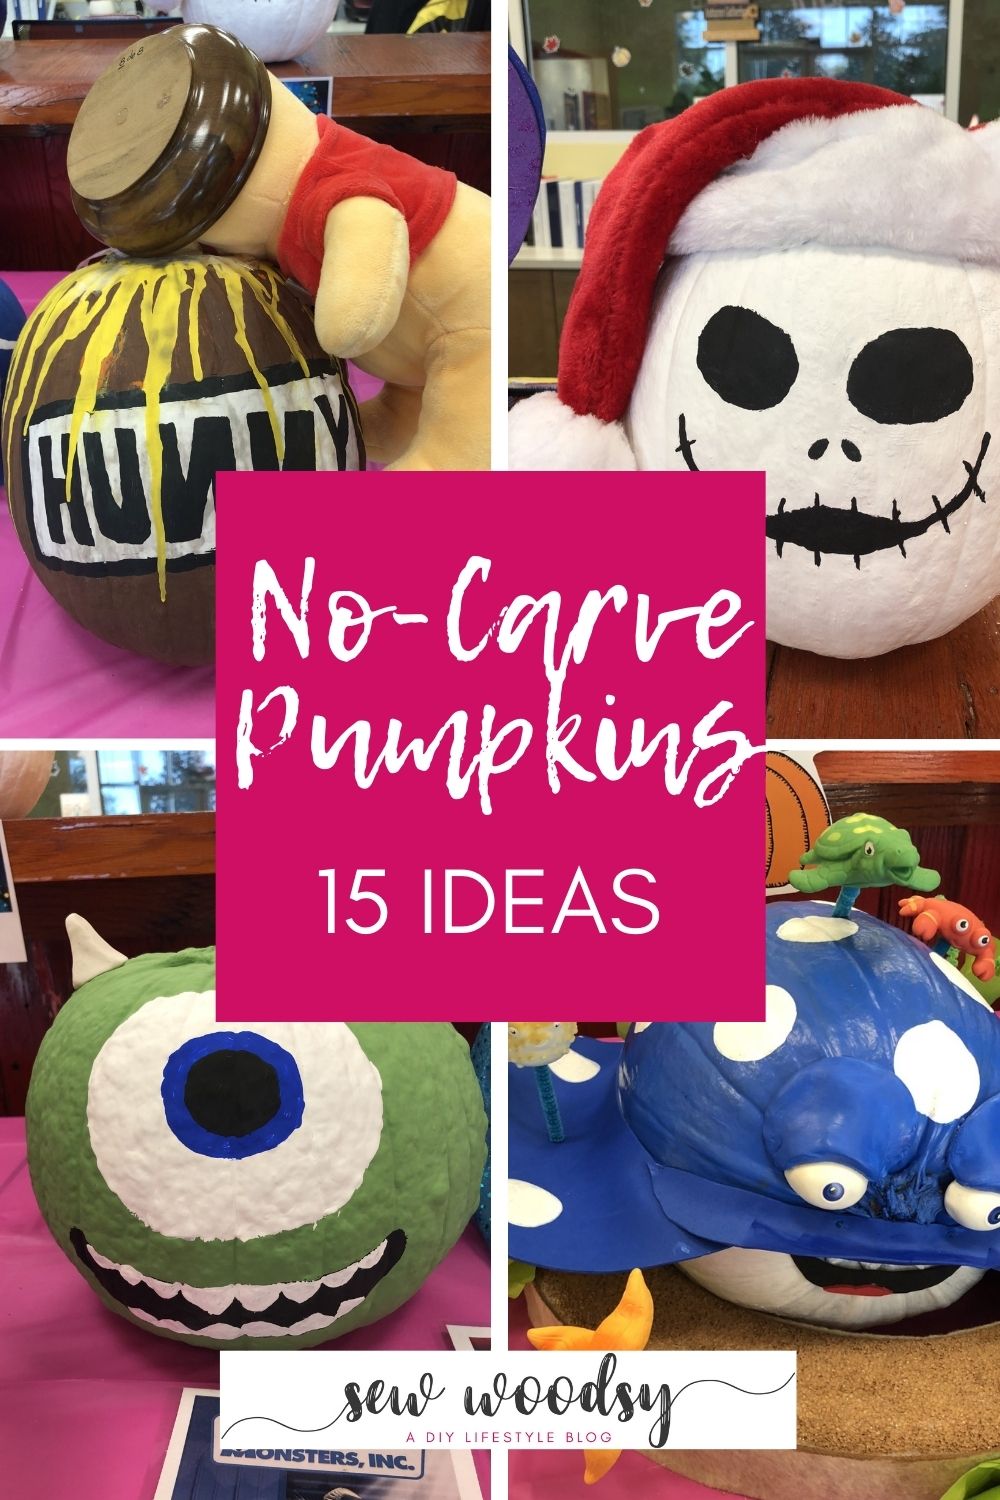 Four no carve pumpkins; winnie the pooh, jack skellington, finding nemo, and monster's inc pumpkins.